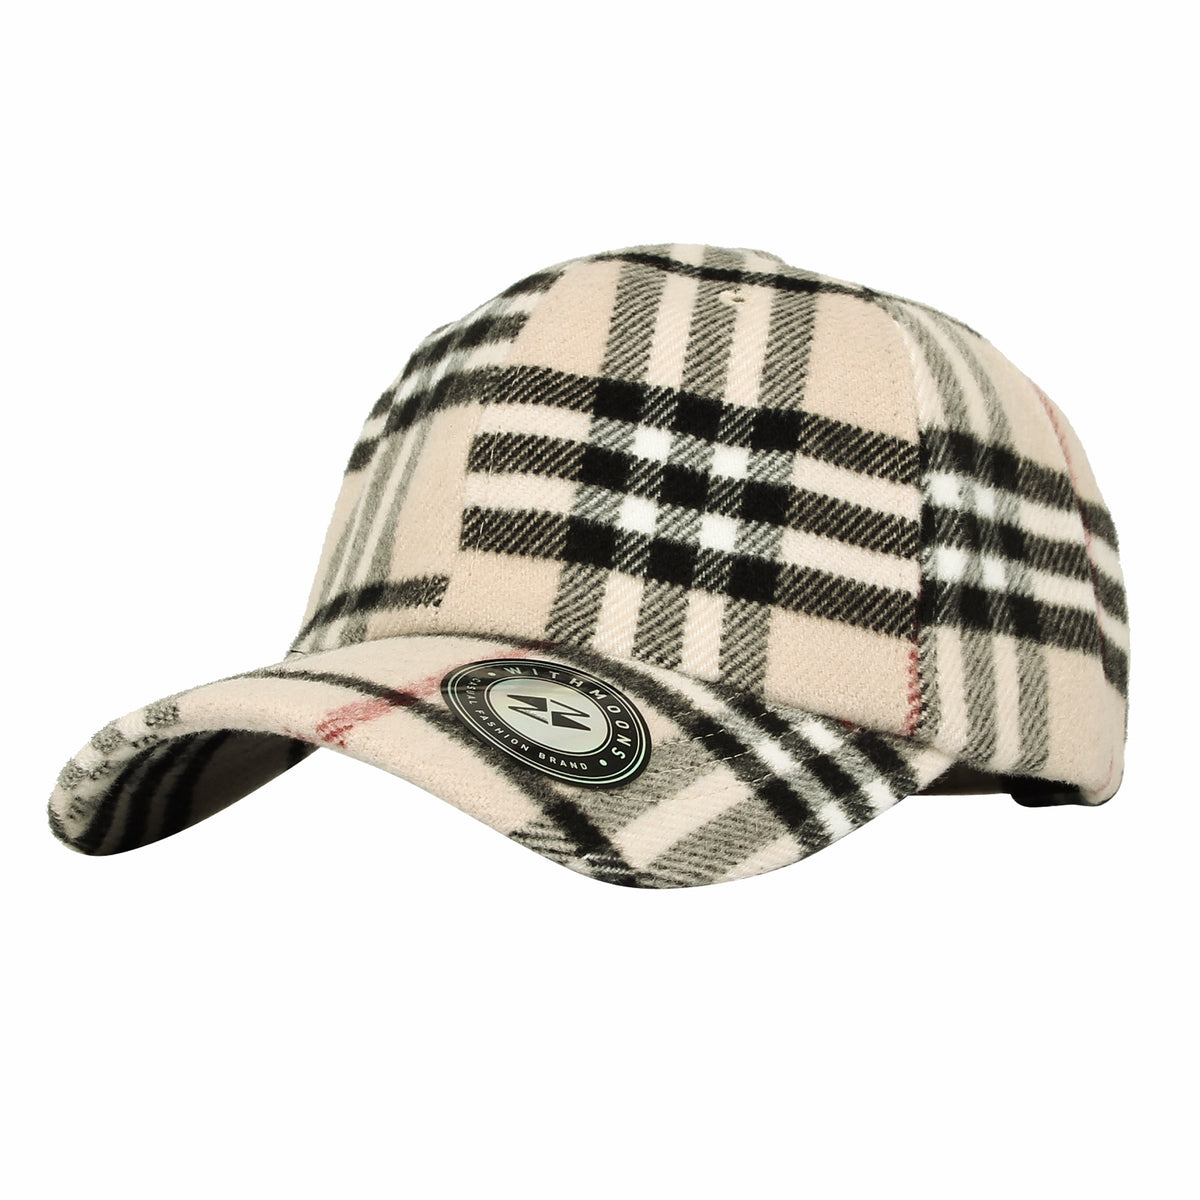 Baseball Cap Tartan Plaid Check Winter Cotton Hat – WITHMOONS